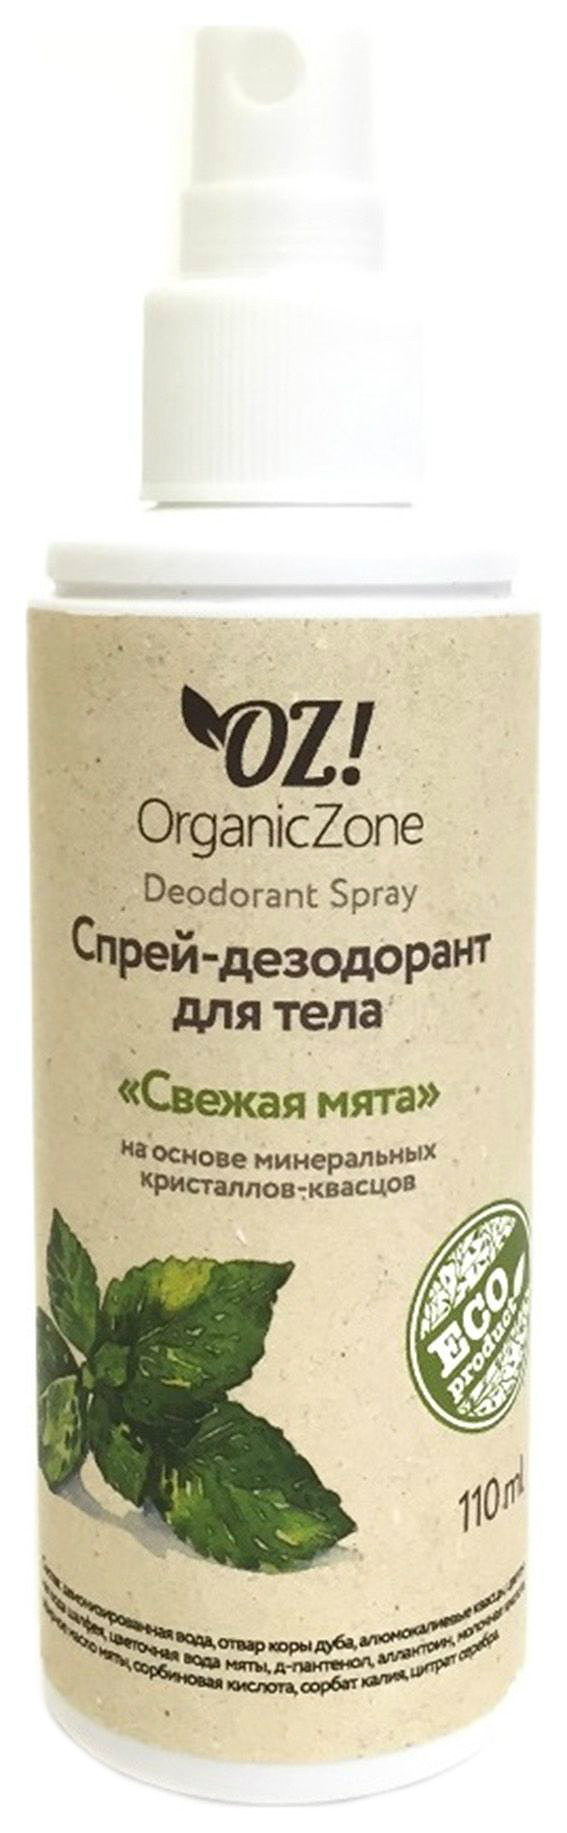 Дезодорант OrganicZone Свежая мята 110 мл